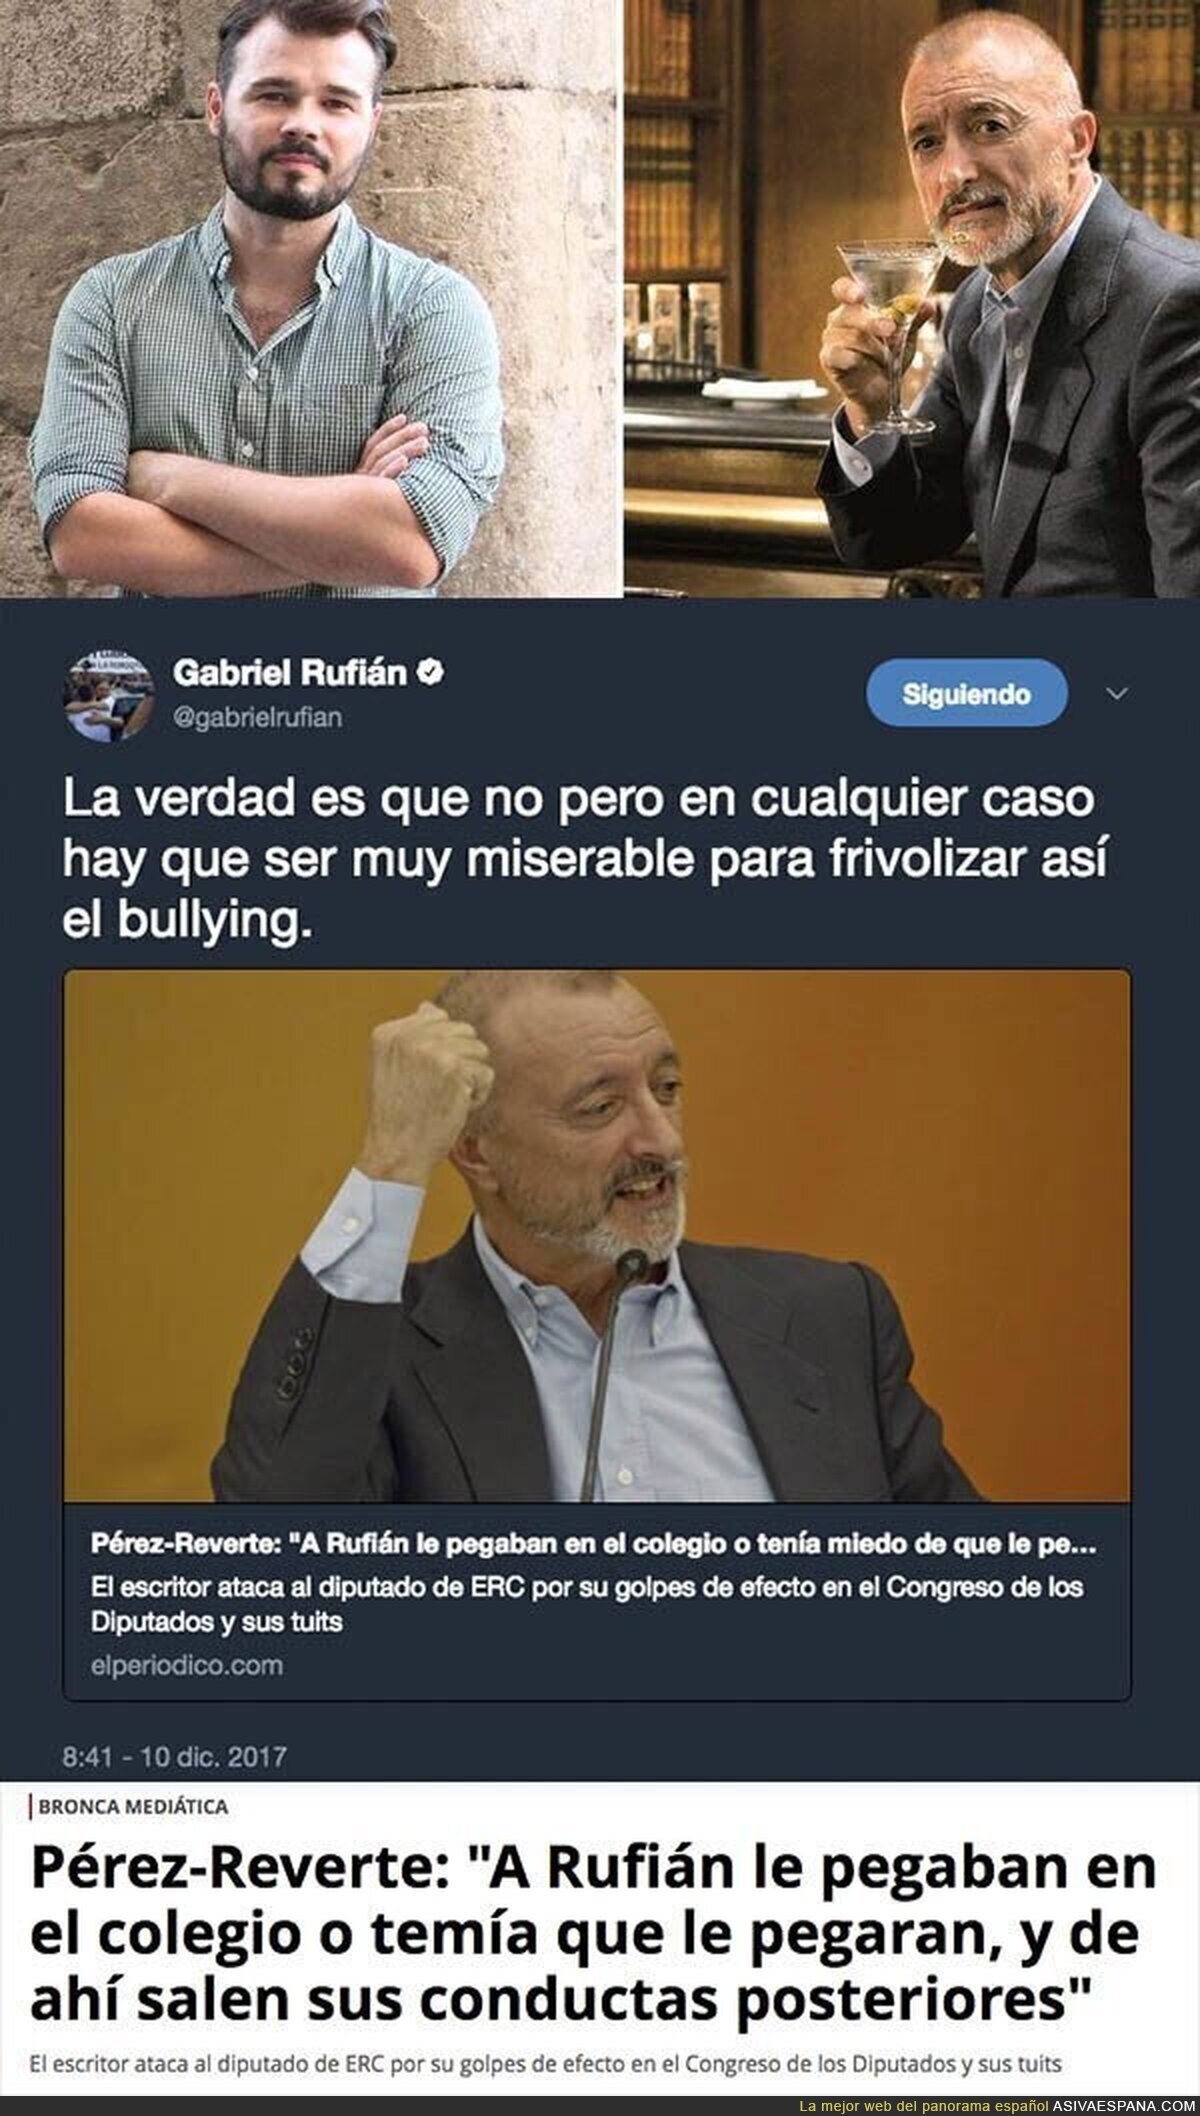 La patética forma de Arturo Pérez-Reverte para atacar a Gabriel Rufián usando el bullying